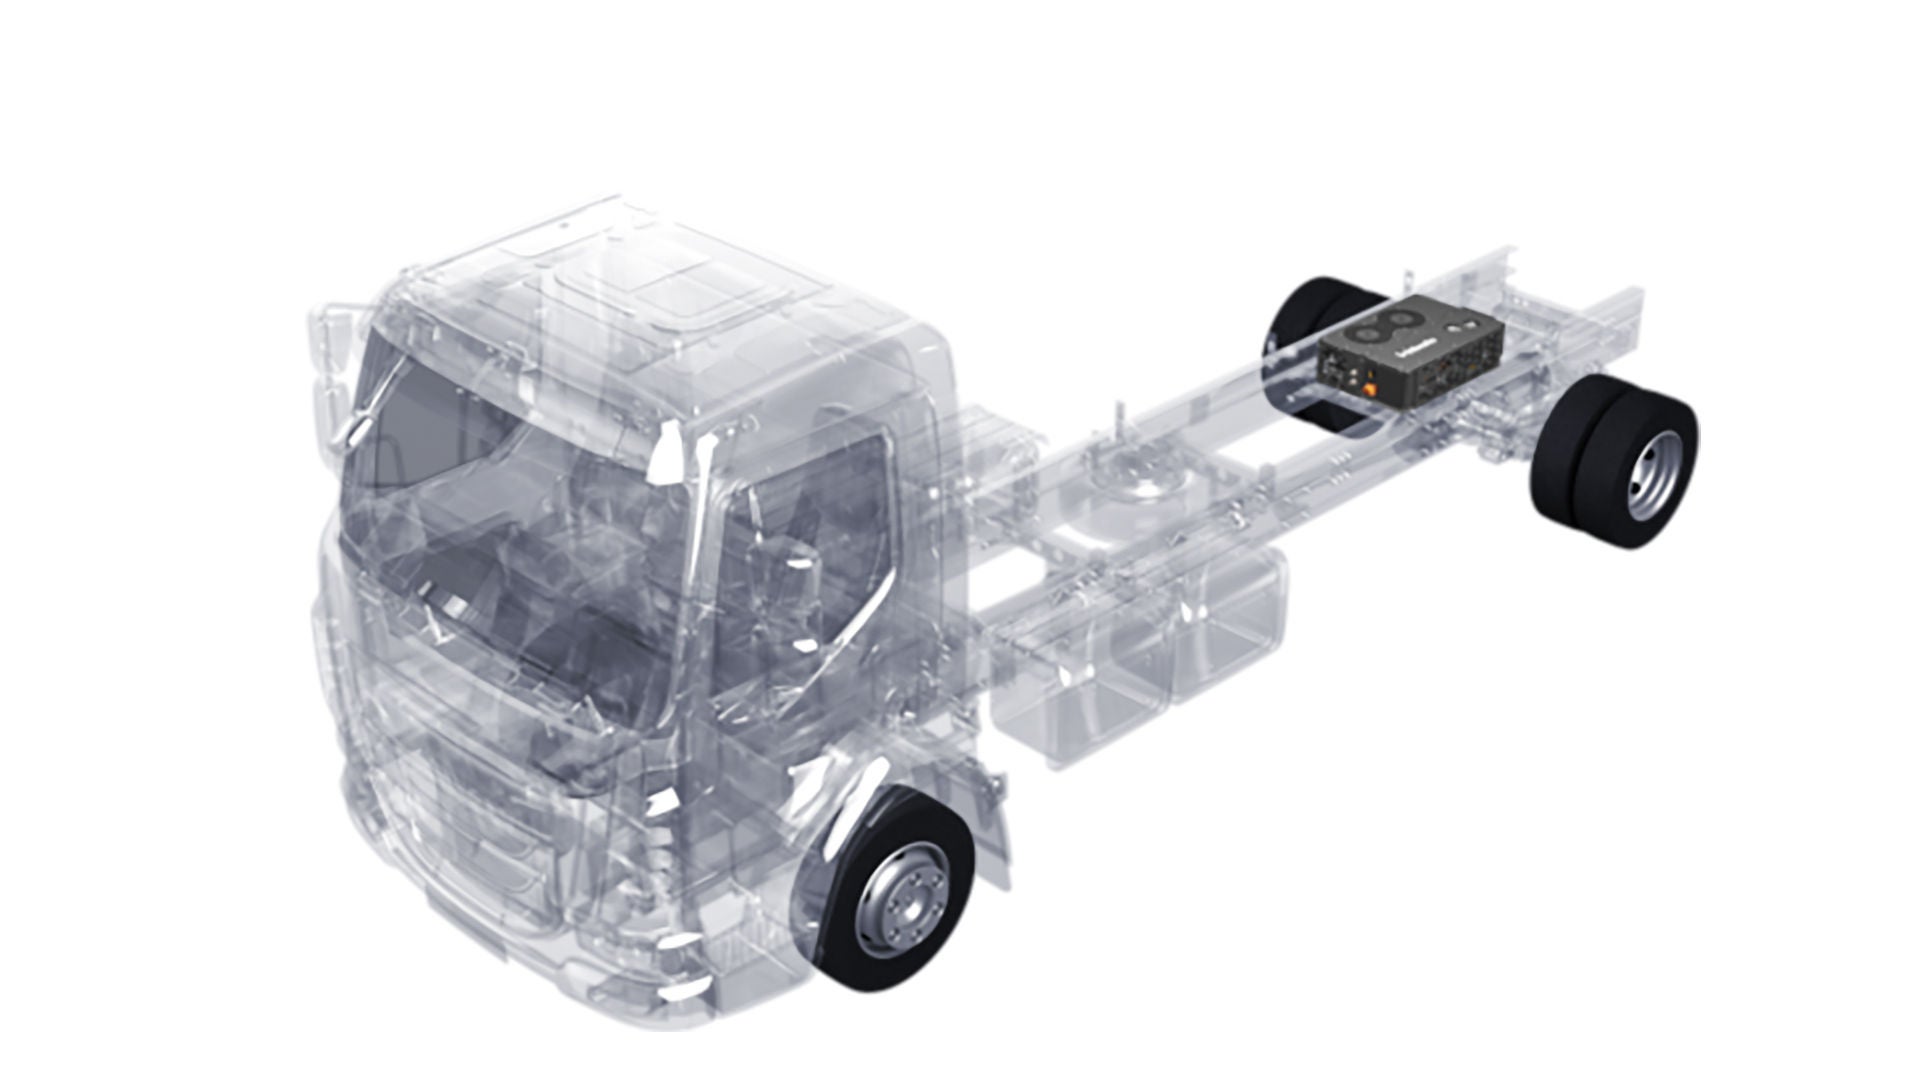 Illustration of eBTM installed in a truck